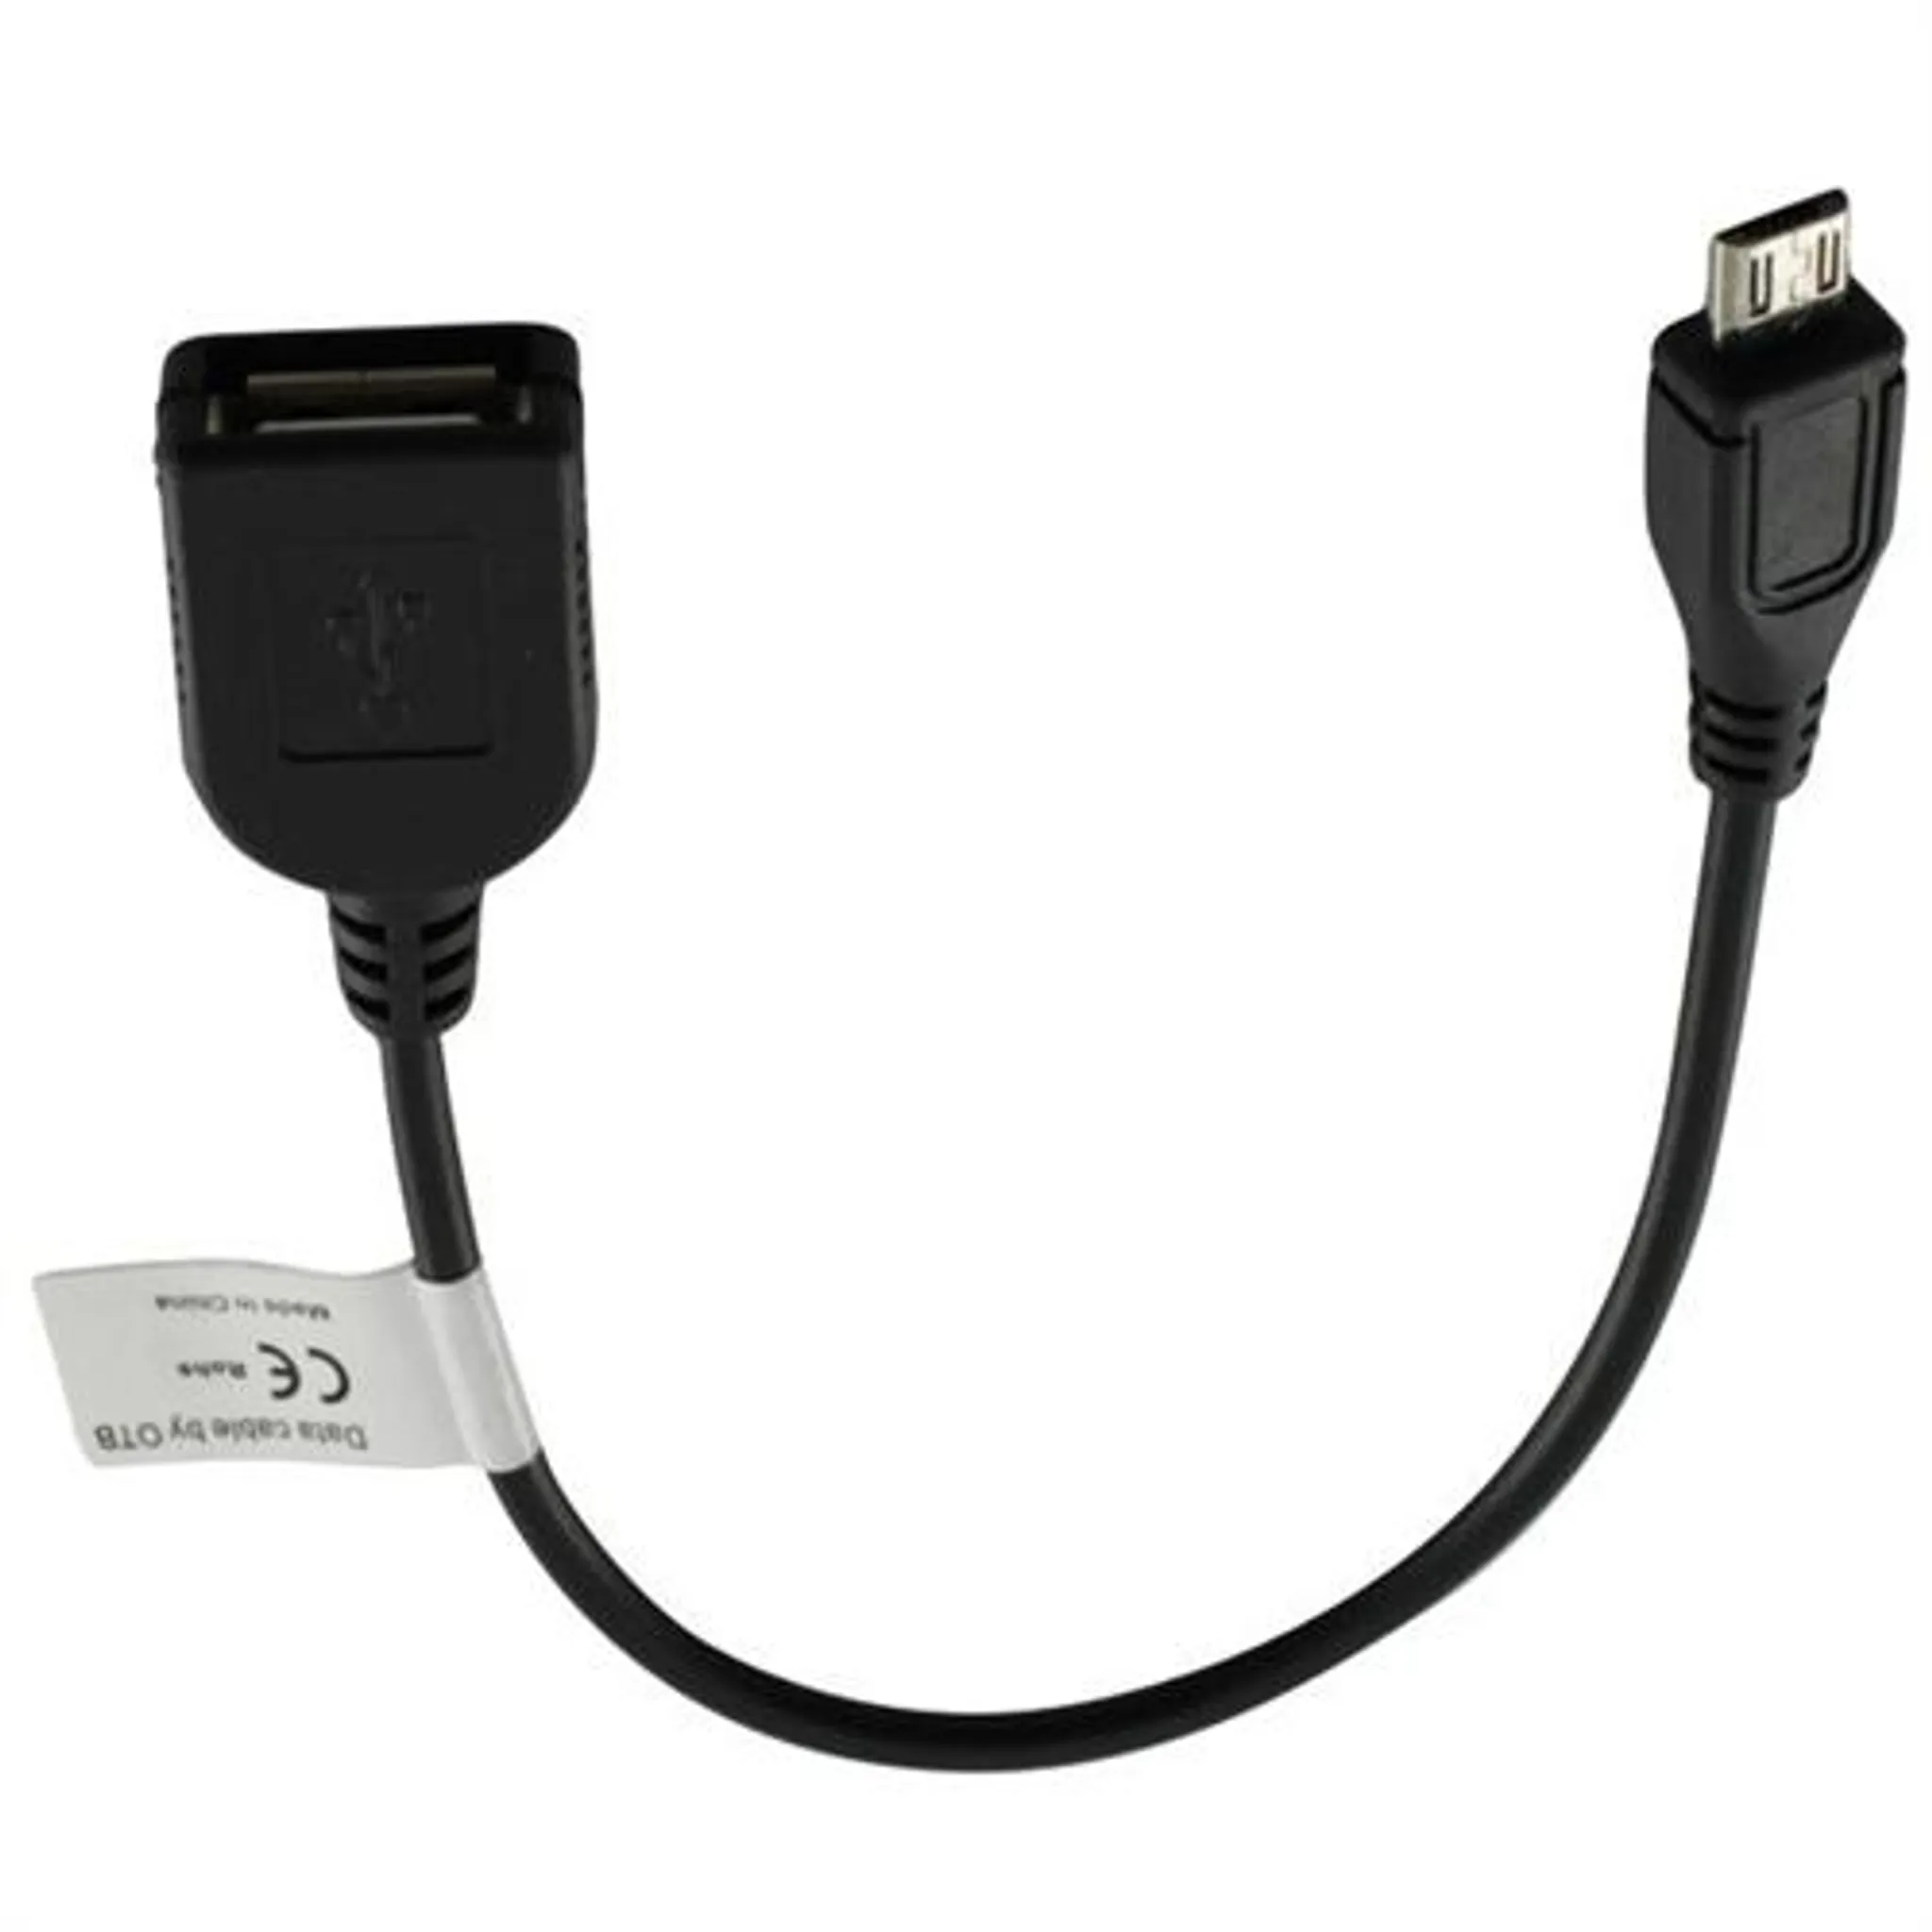 Mini support. OTG Micro USB Samsung. OTG кабель для принтера Атолл. Адаптер кабельный Sudkabel s2. Тройник микро USB для планшета самсунг.